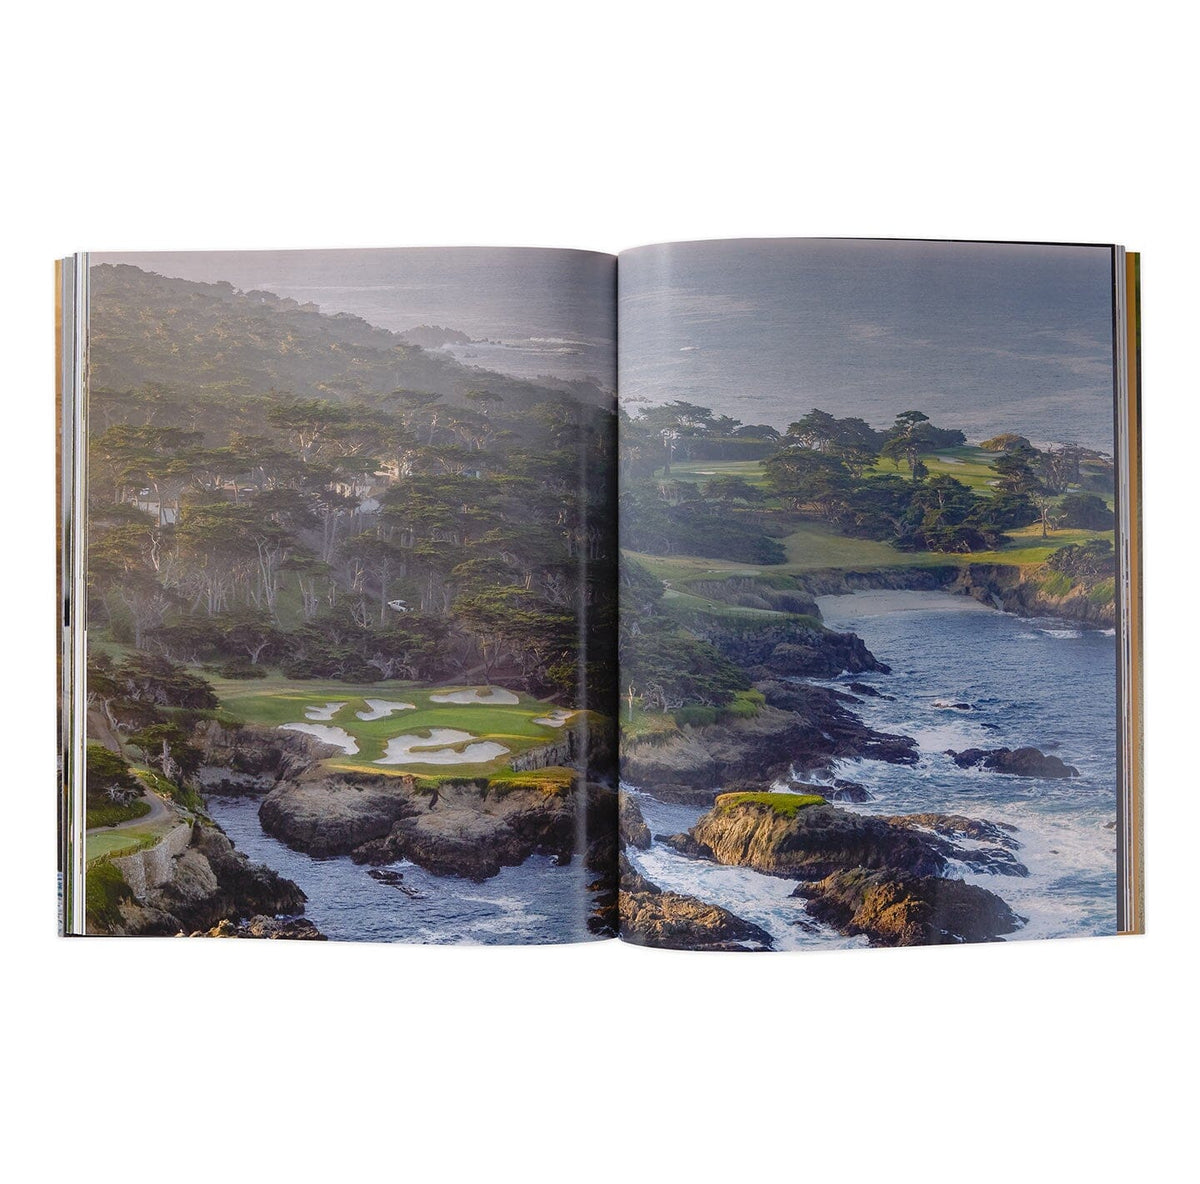 The Golfer&#39;s Journal #21